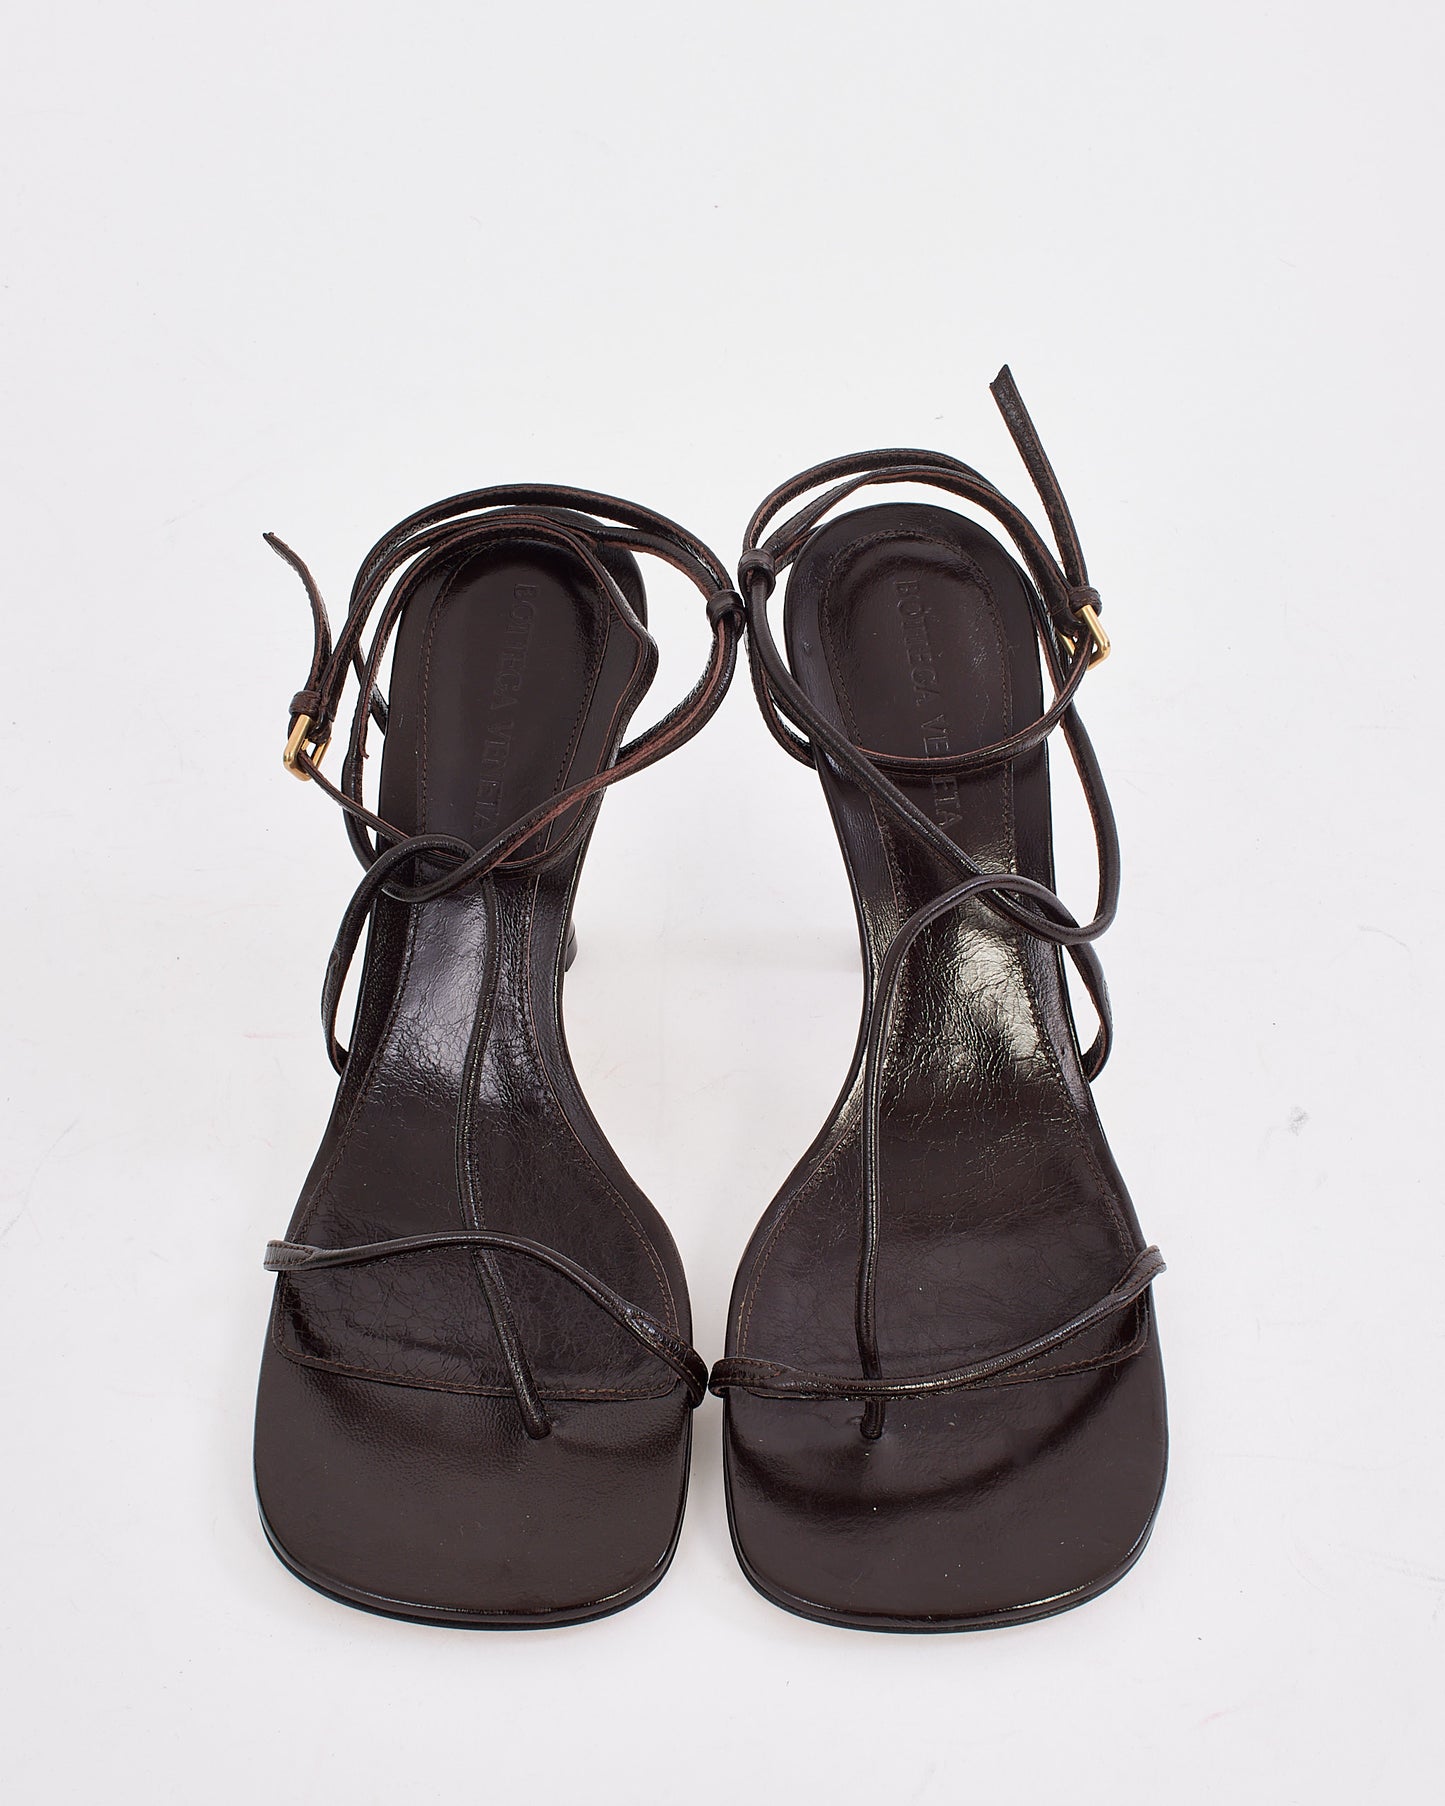 Bottega Veneta Brown Leather Strap Sandals - 38